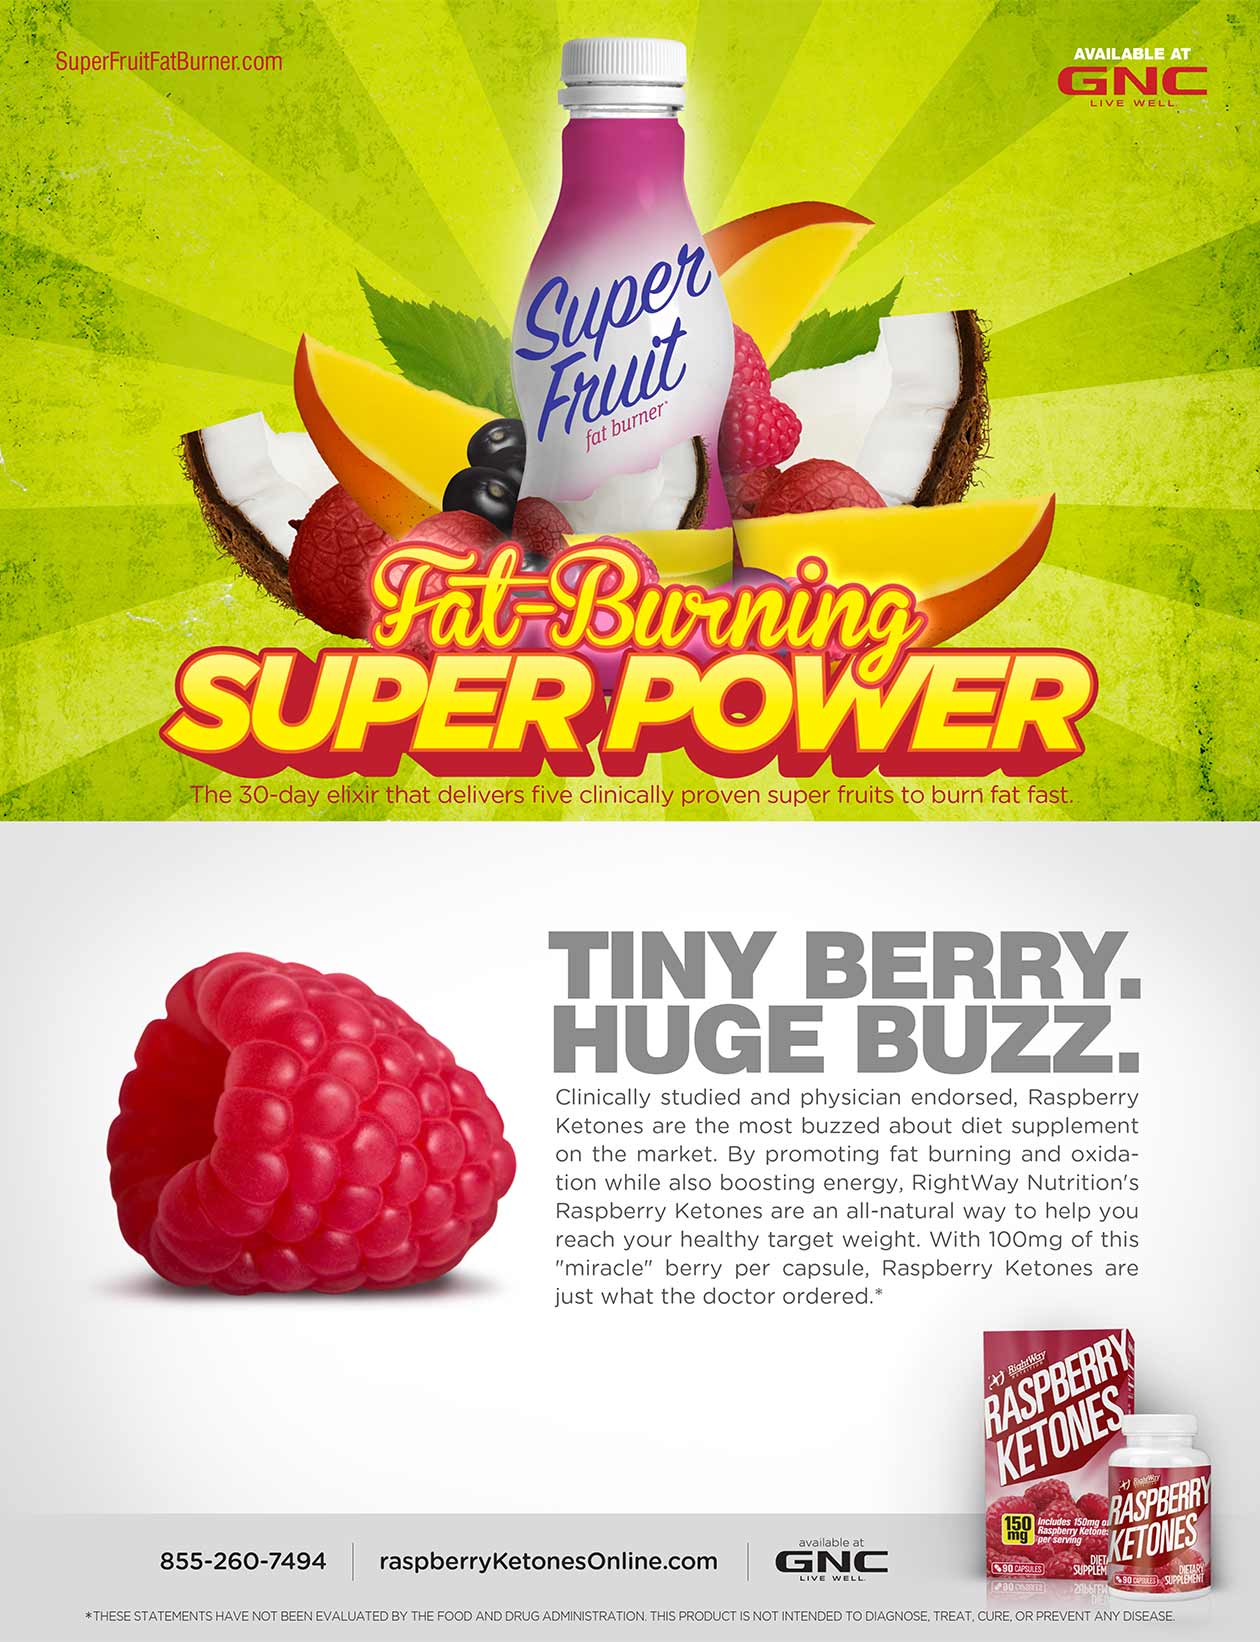 Superfruit / Rasberry Ketones Ad - January 2013